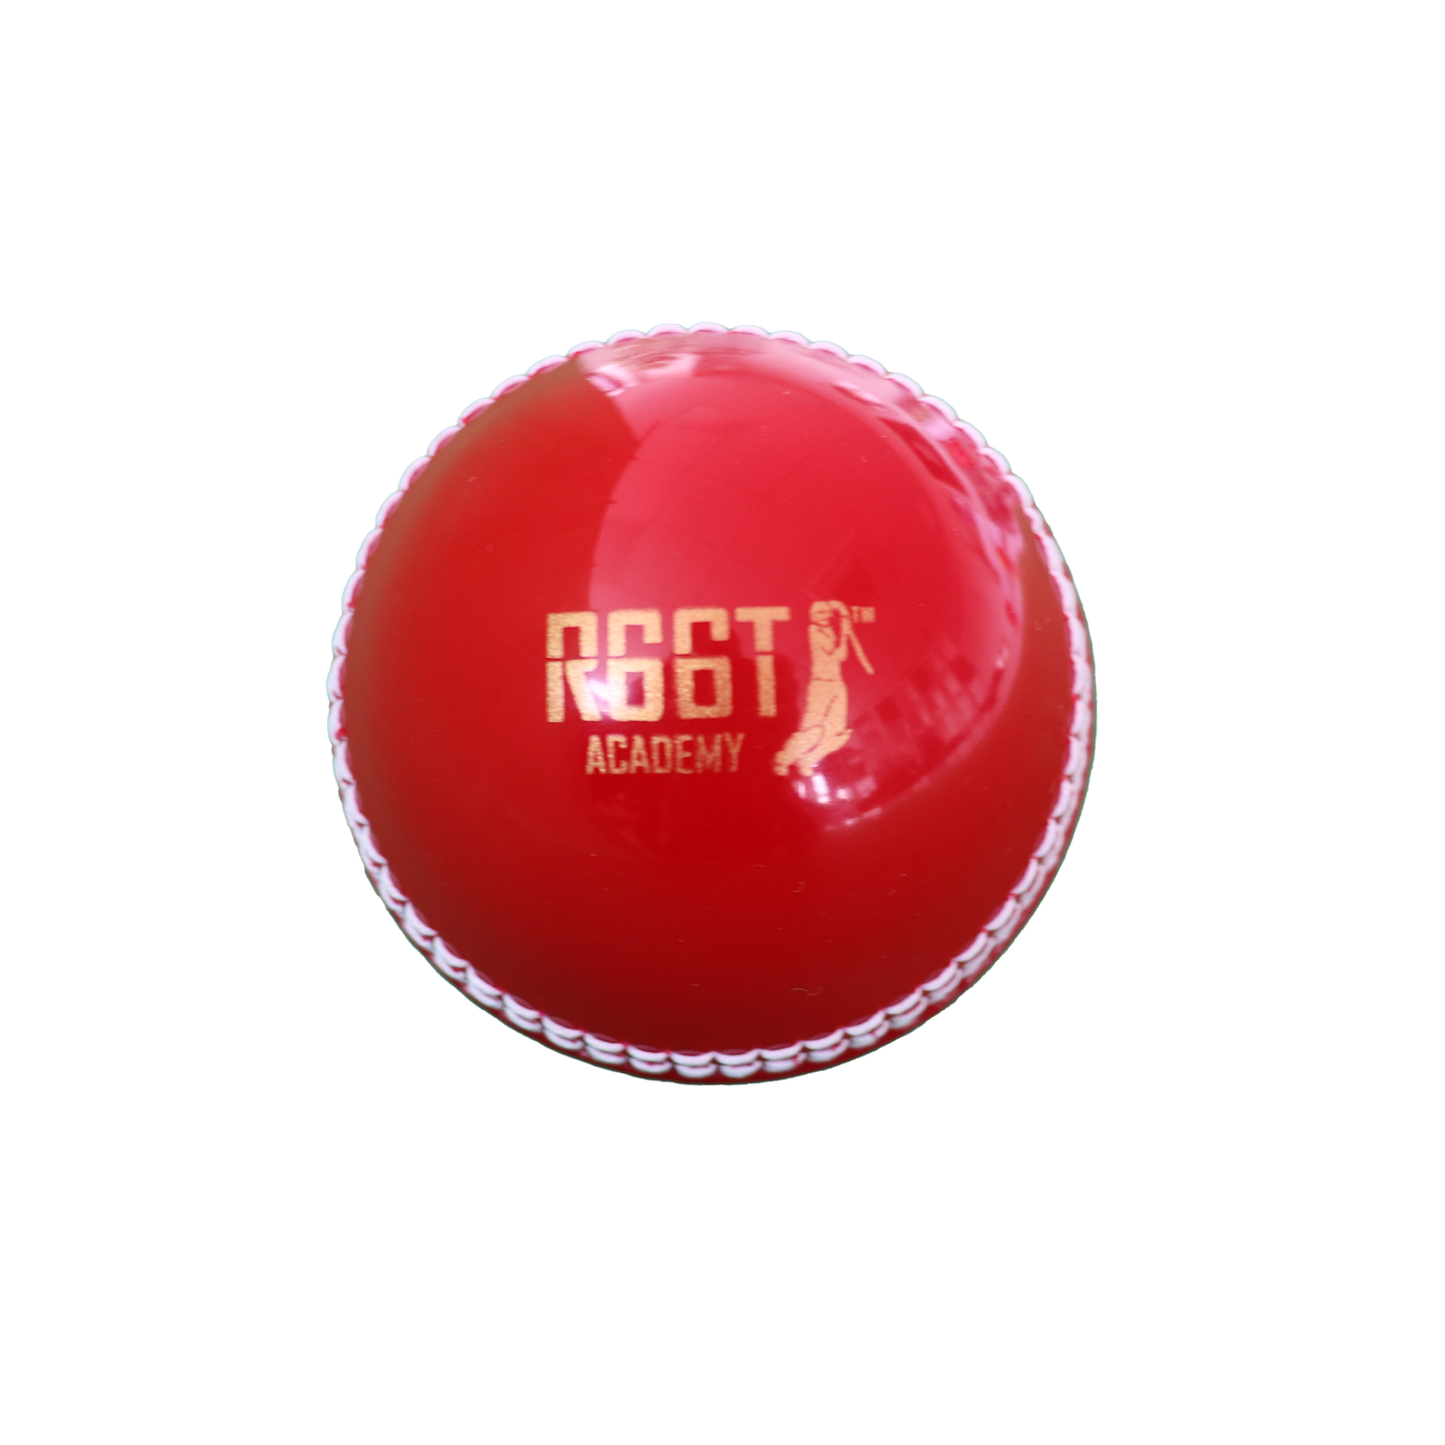 R66T Academy Cricket Fielding Bundle